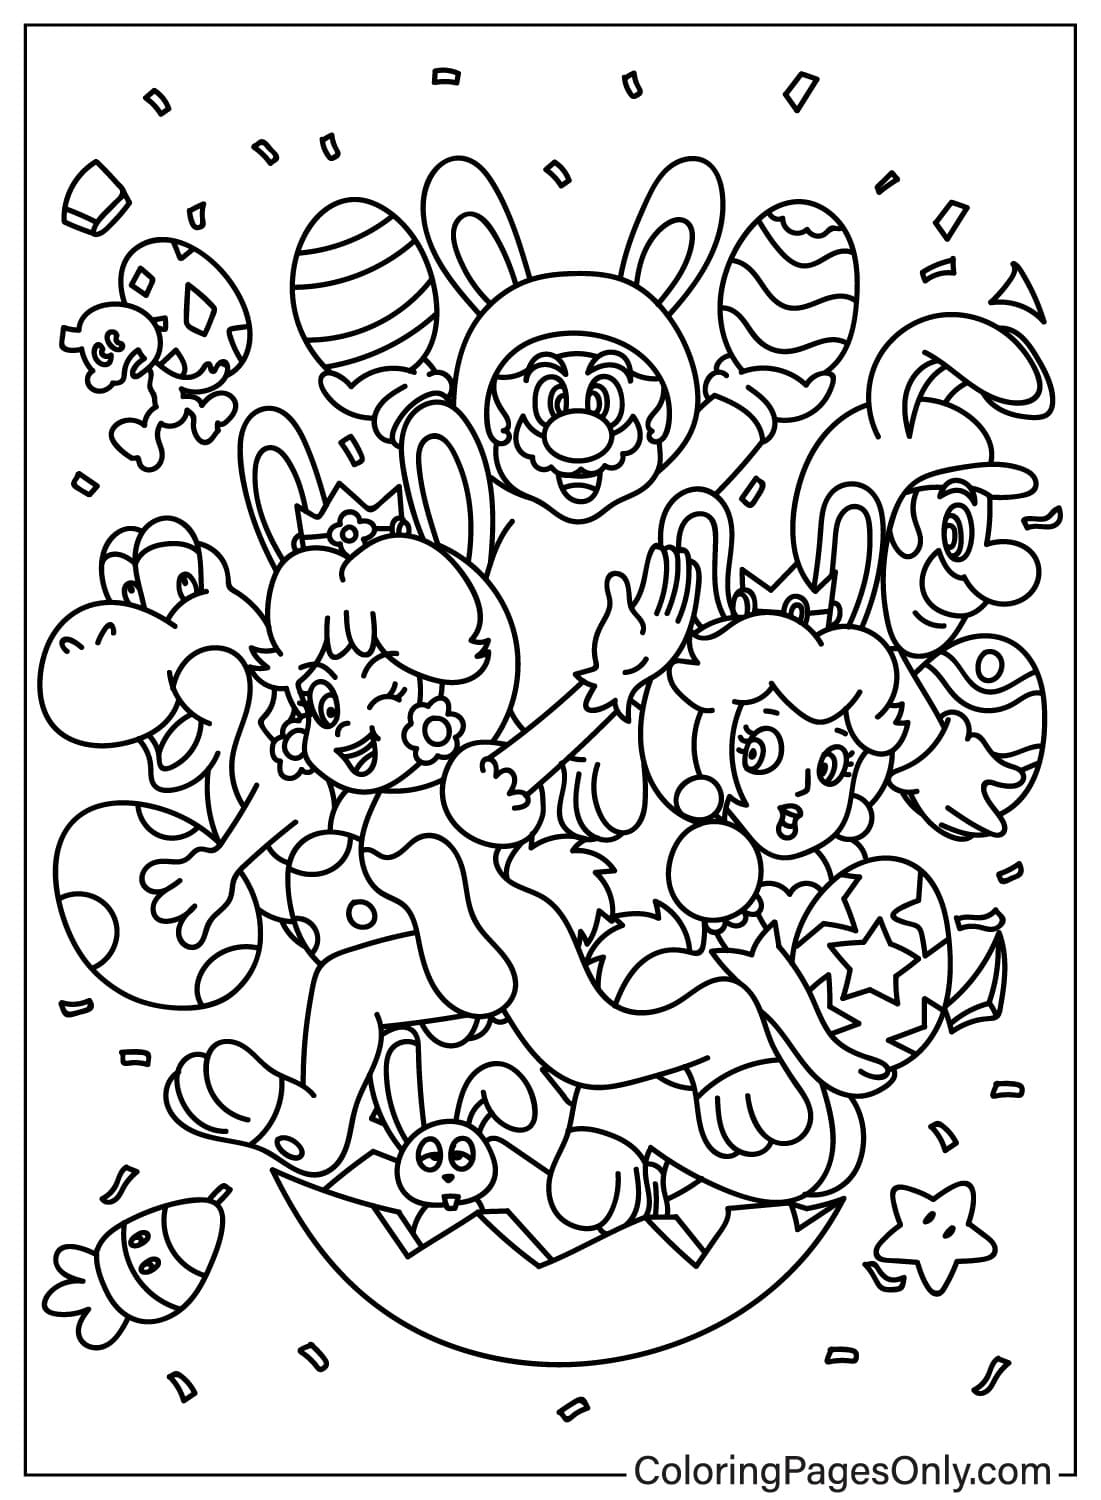 Página para colorear de Mario de Pascua de dibujos animados de Pascua